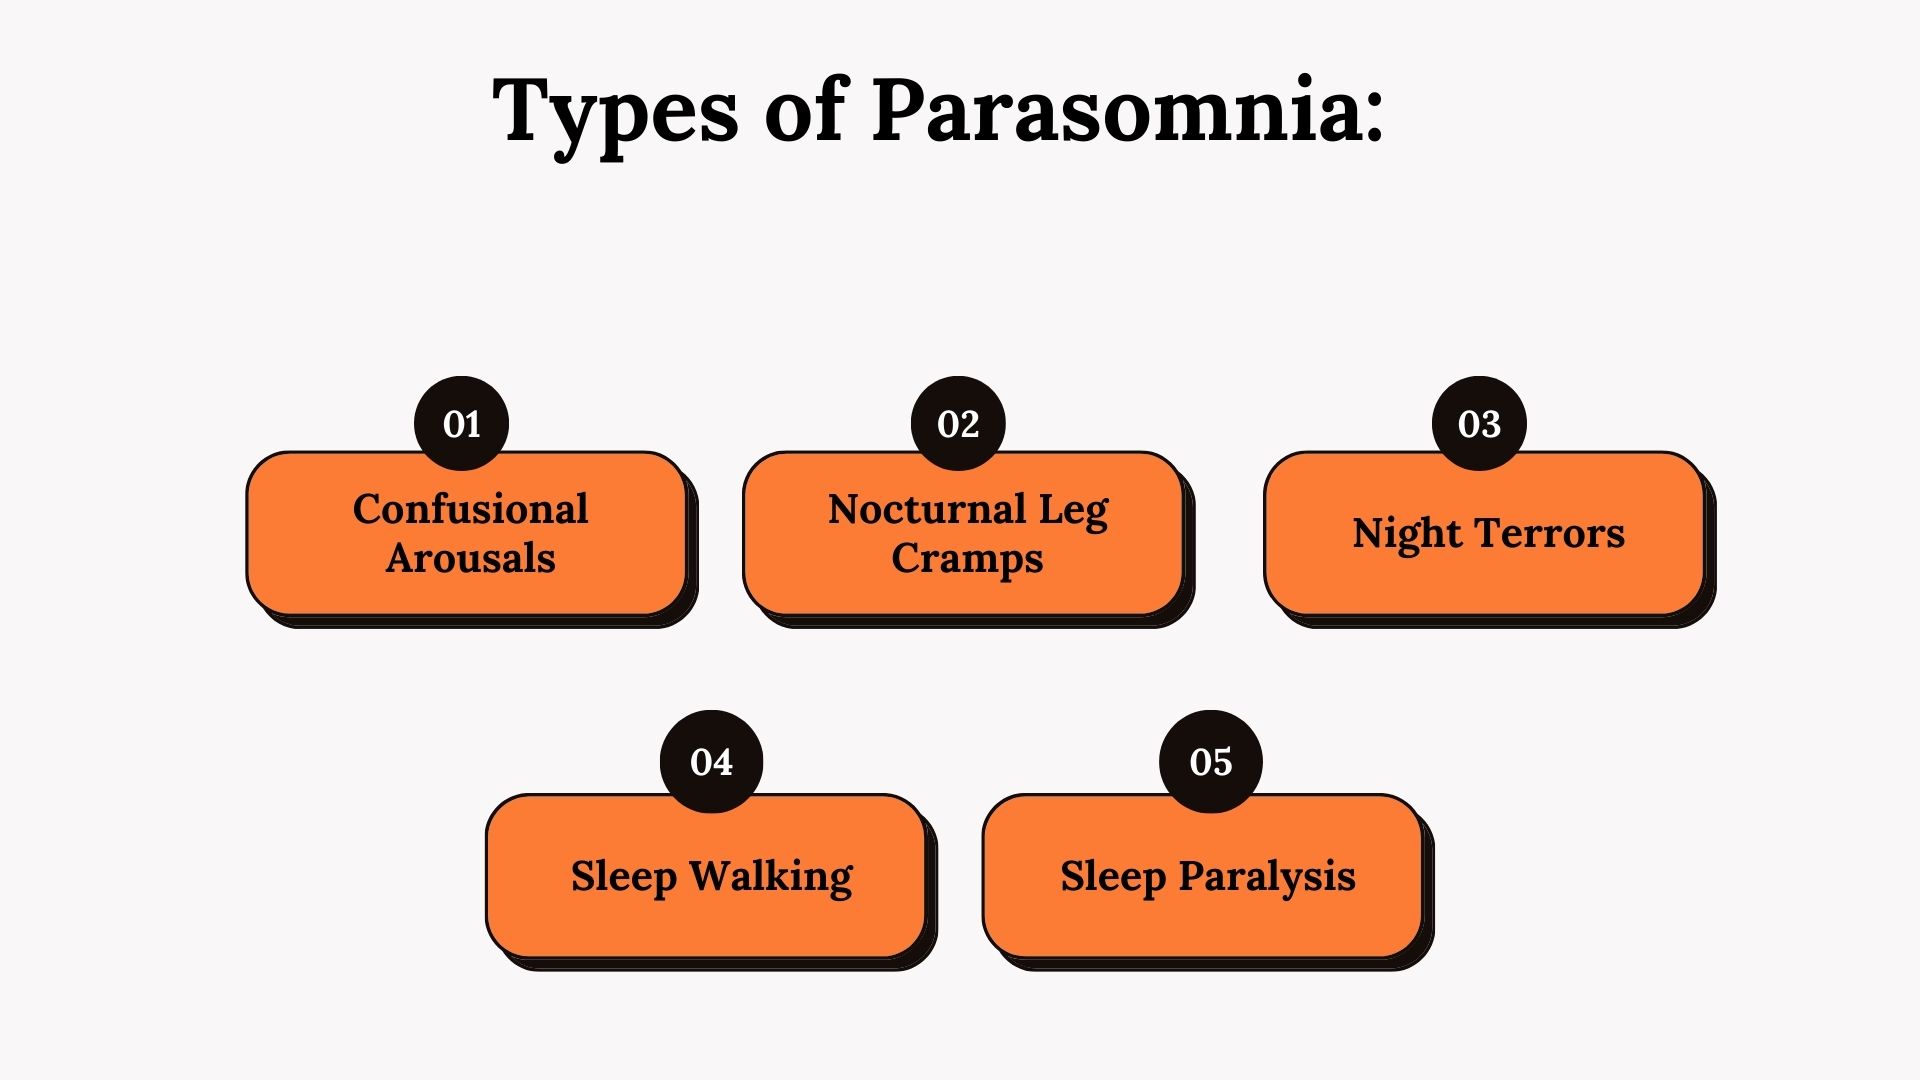 Types of Parasomnia